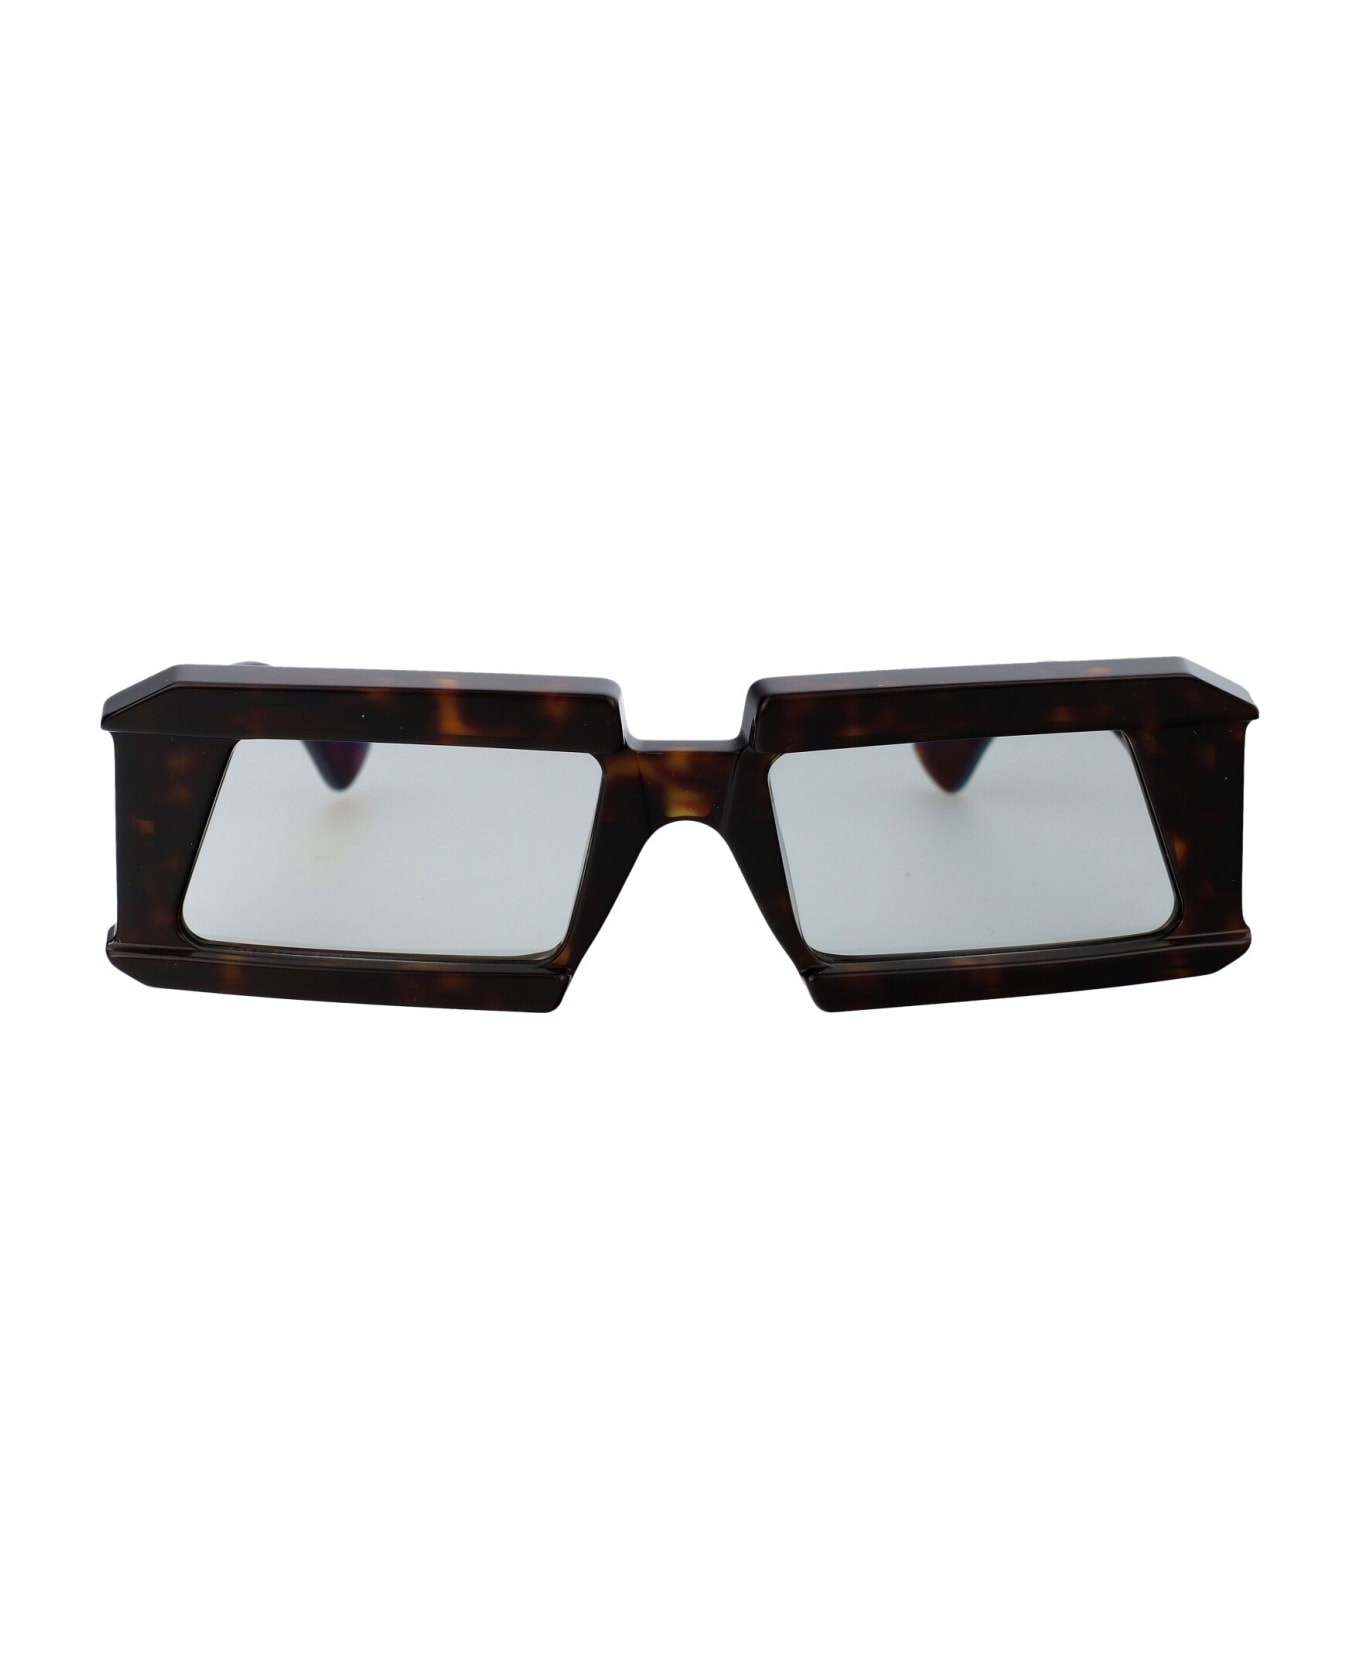 Kuboraum Maske X20 Sunglasses - TS CT 2grey1* サングラス